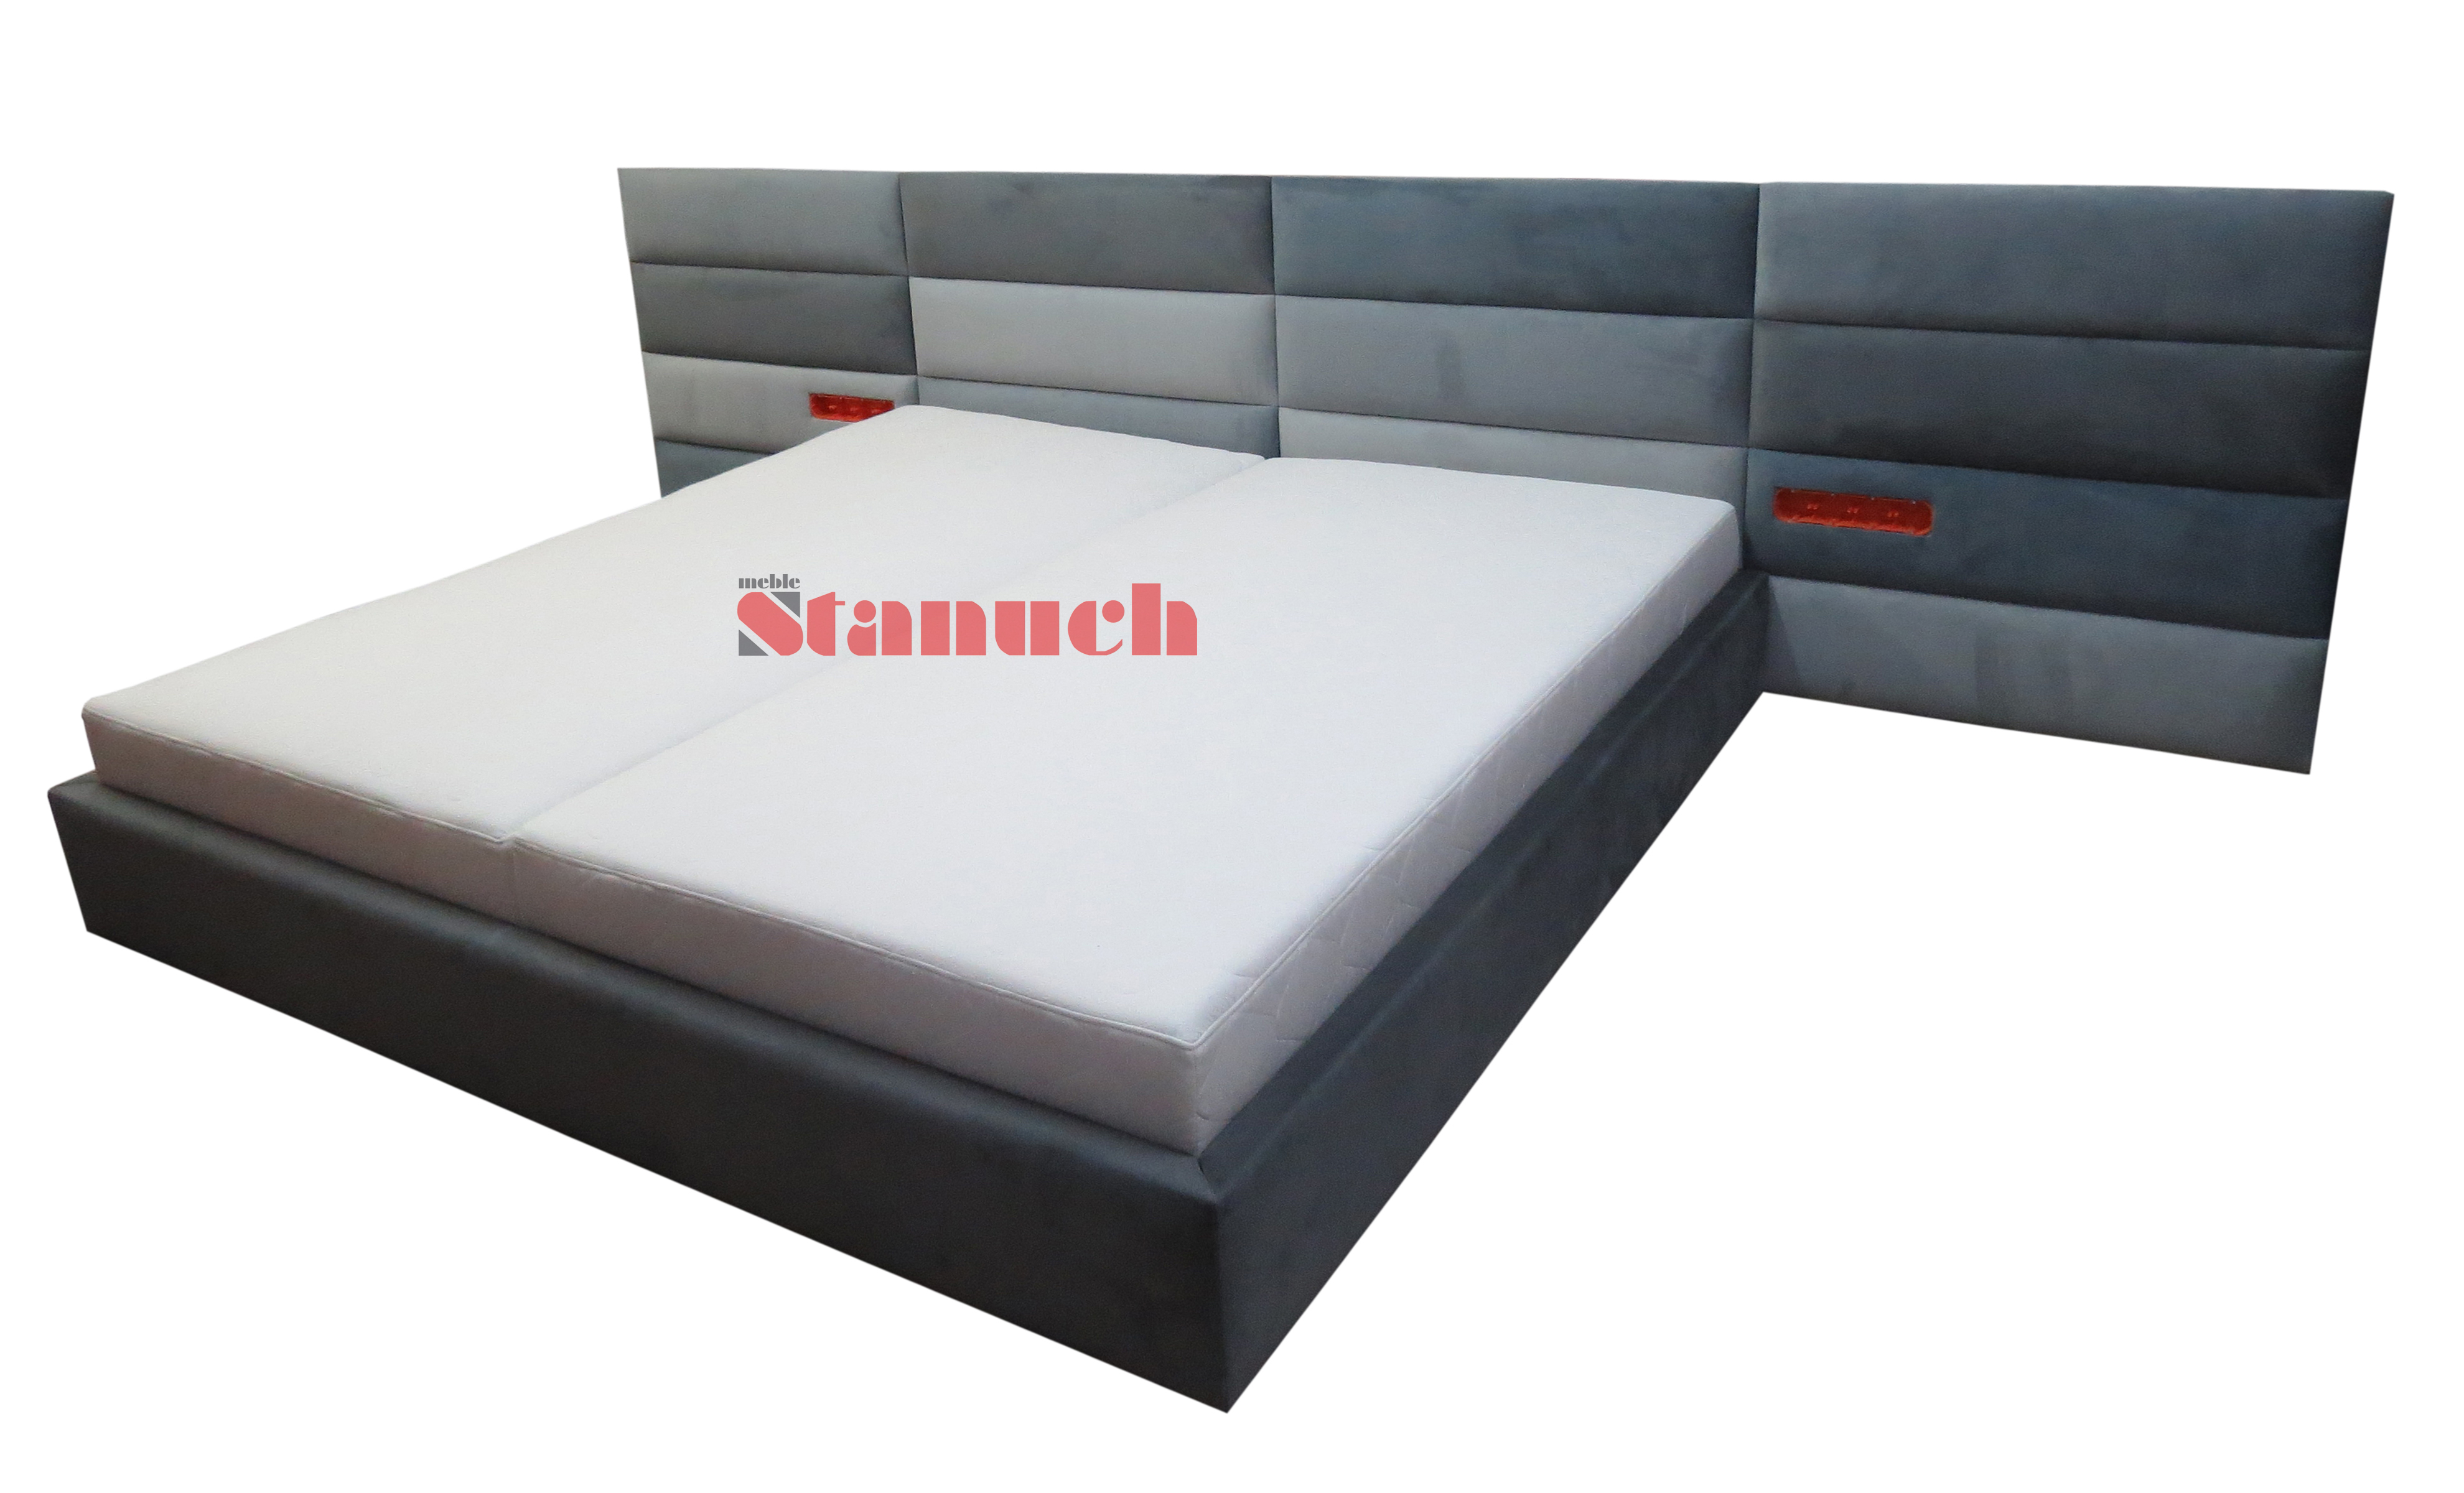 The manufacturer of upholstered beds